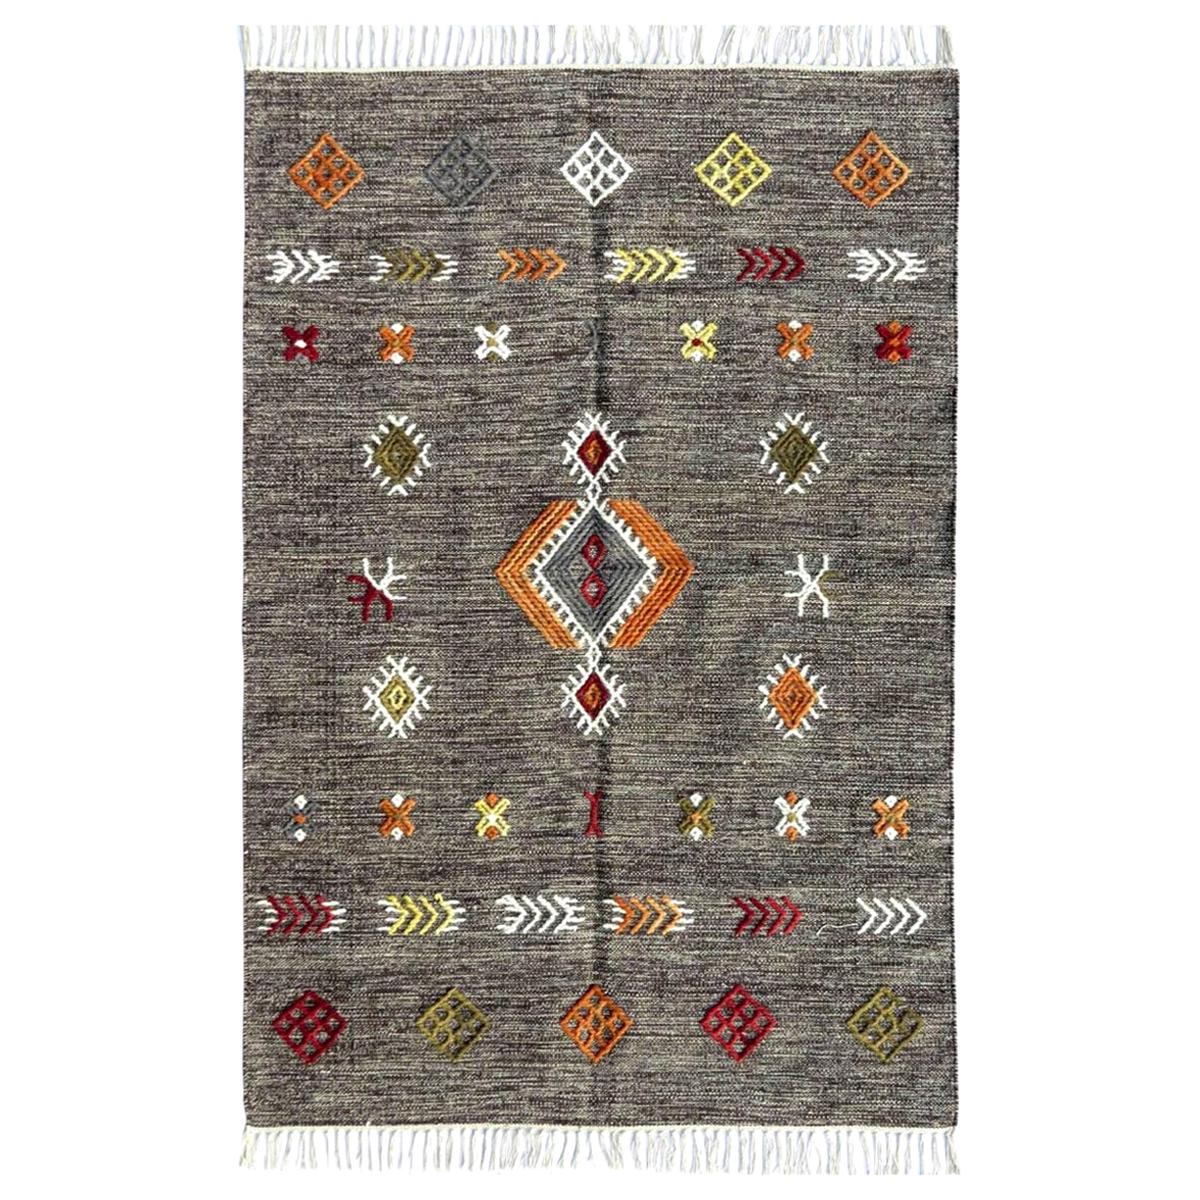 Beautiful New Tribal Moroccan Design Handwoven Kilim Rug